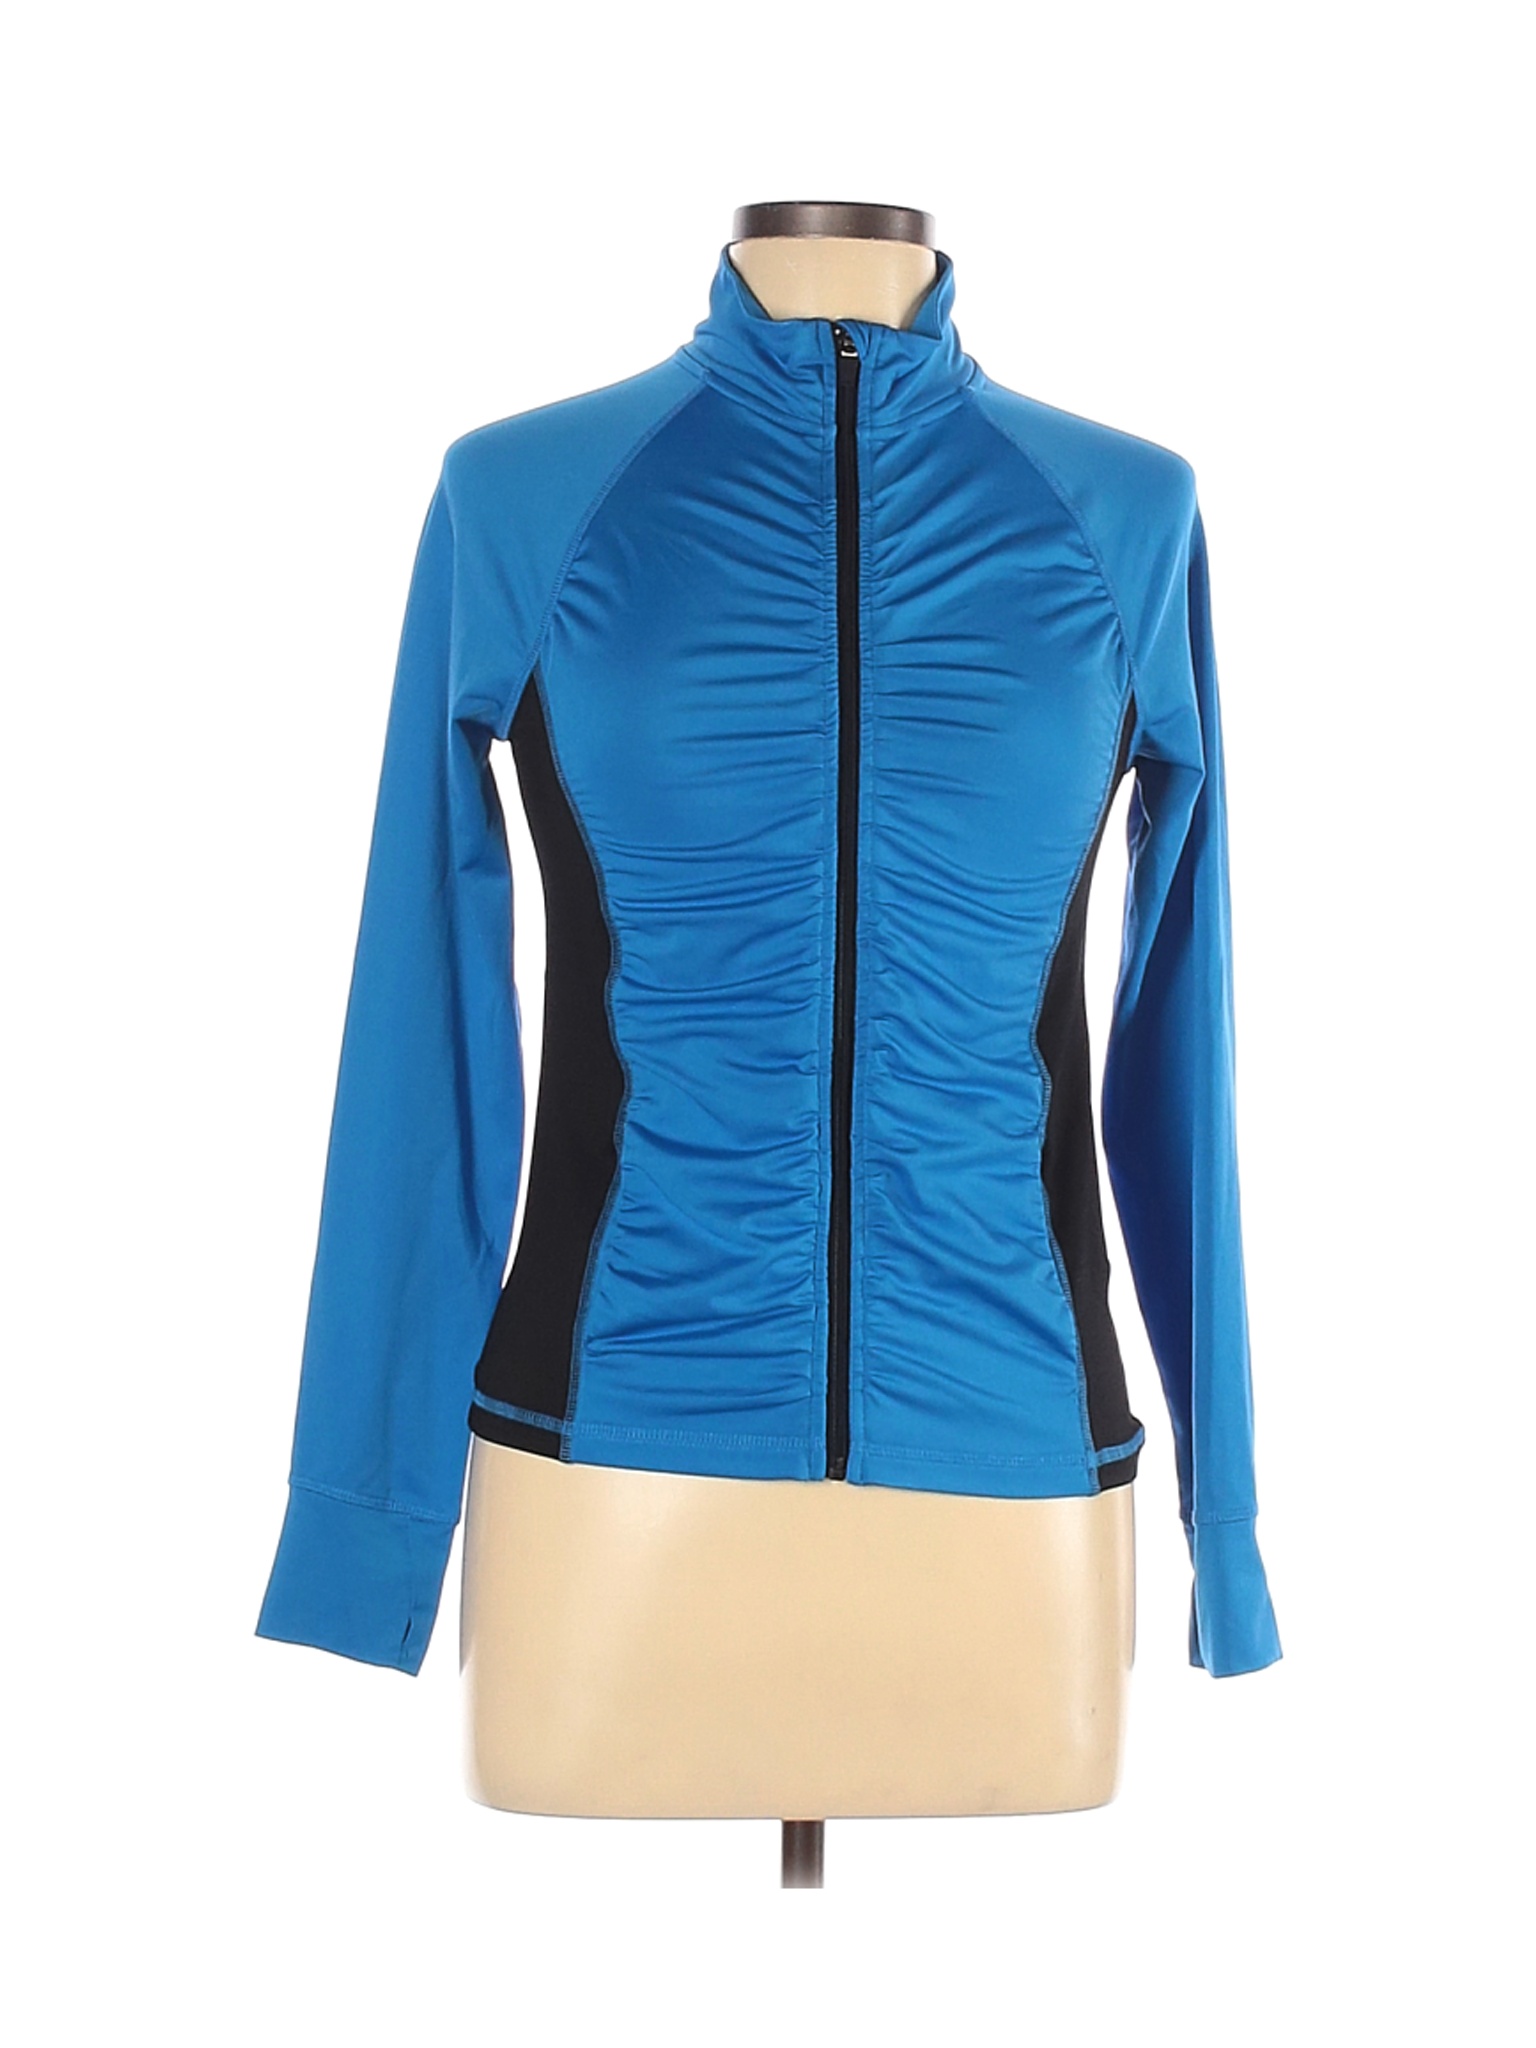 Mambo Women Blue Track Jacket L | eBay